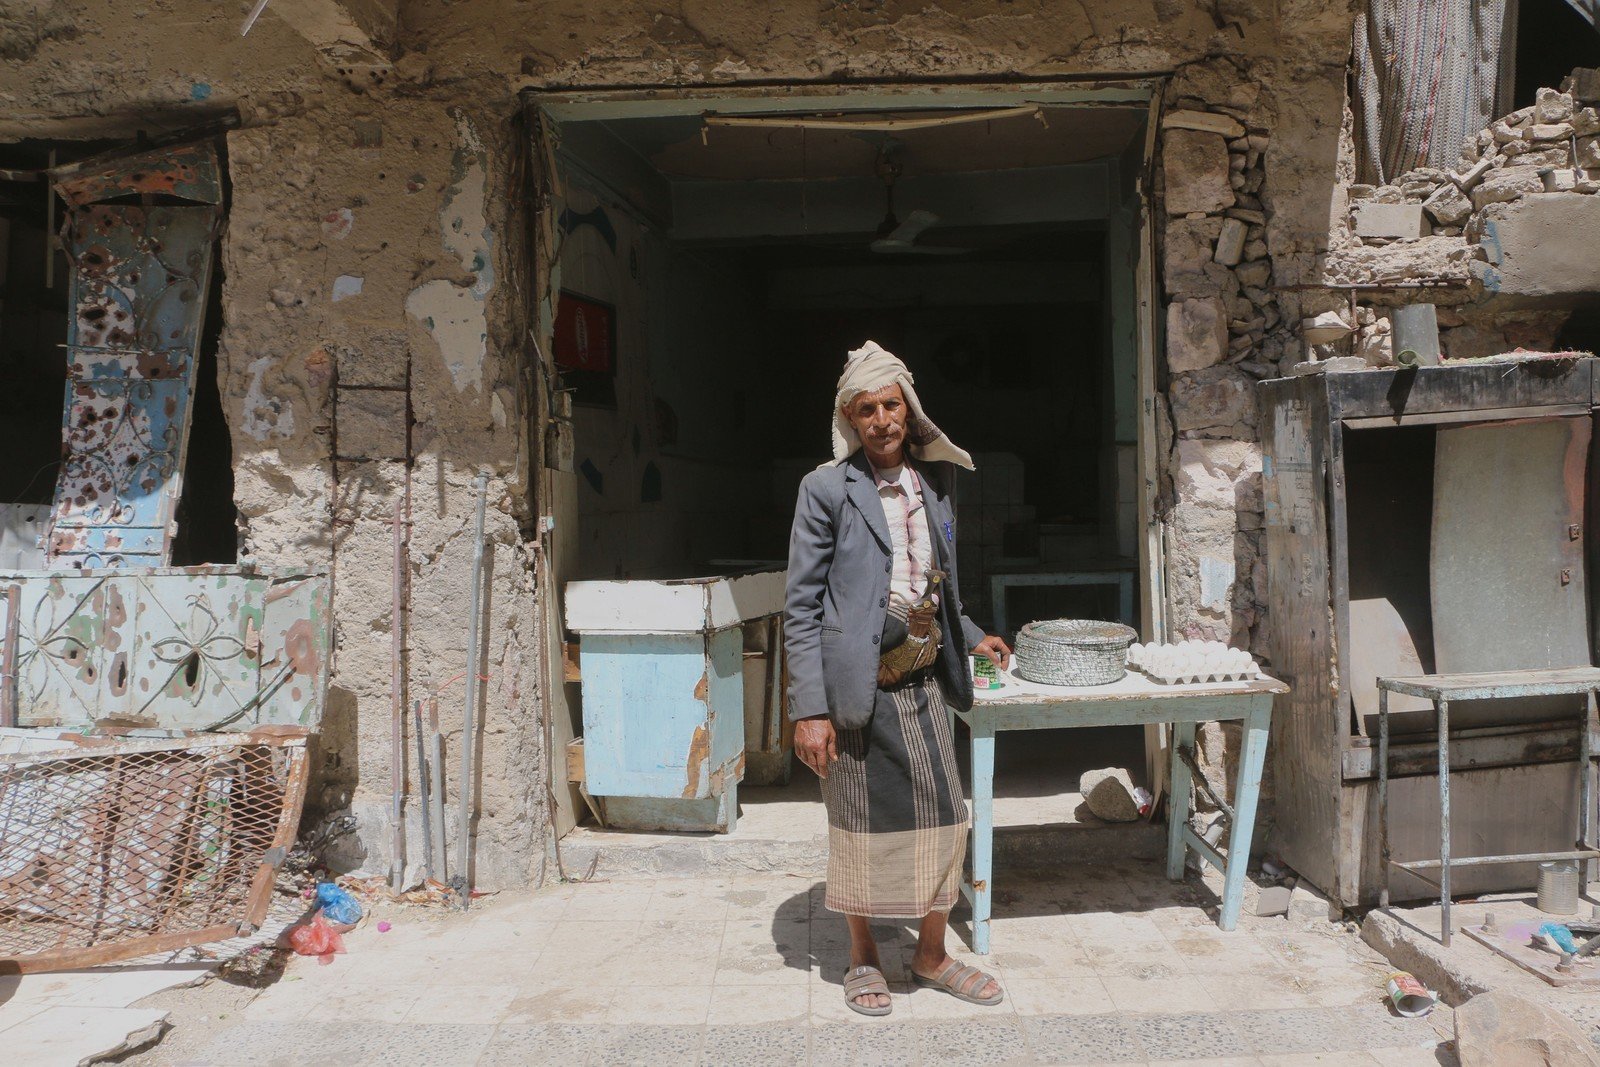 Ahmed Al-Haj 在塔伊兹地区 (Taiz) 经营快餐店。爆发激烈冲突期间，他只好暂停营业，但他已决定重开快餐店赚取生计。市面上的小商户告诉我们，假如情况仍无改善，他们迫不得已会关门，逃命到更安全的地区。